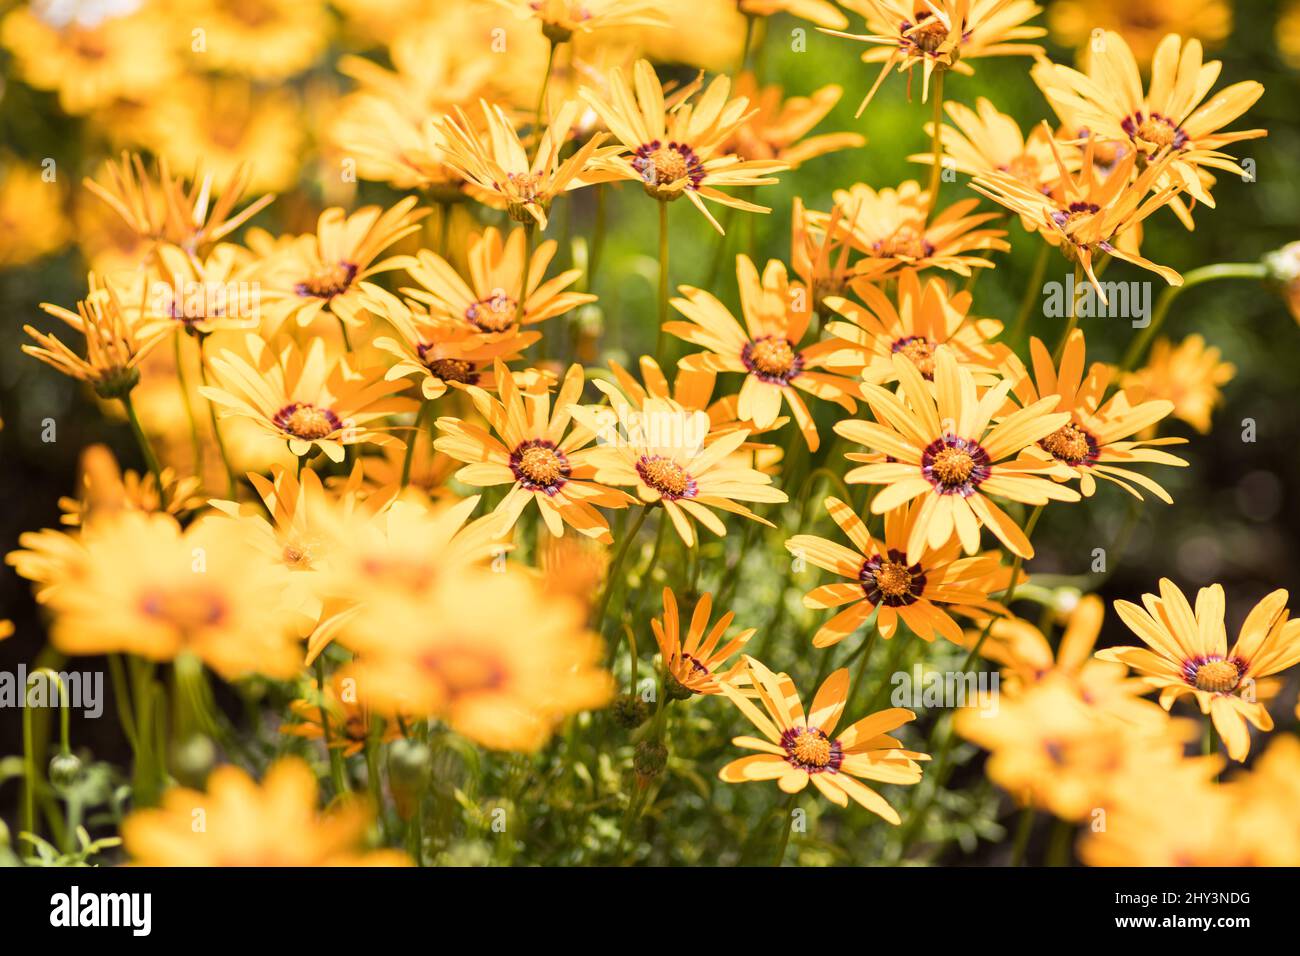 Selective focus of yellow ursinia flowers growing in sunlight Stock Photo